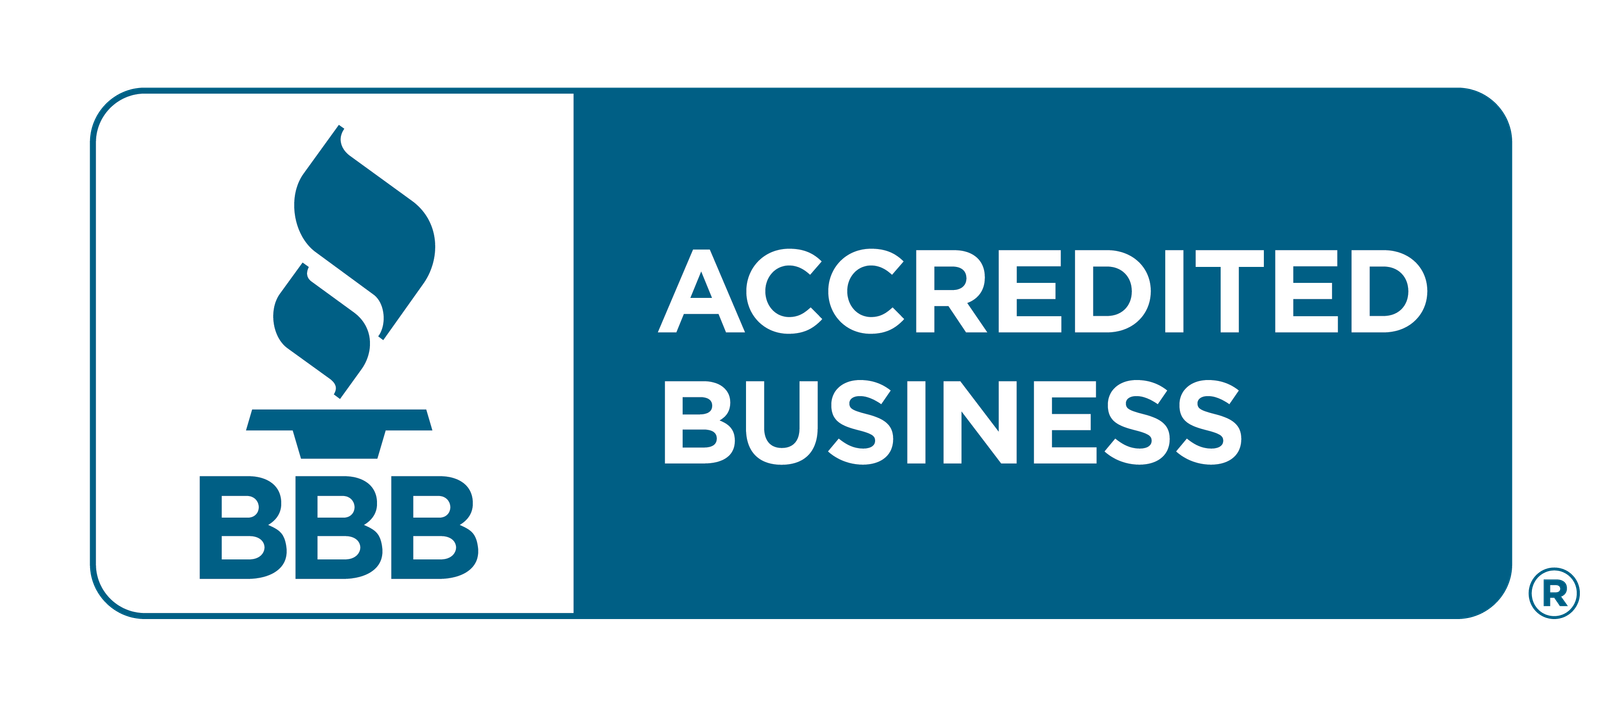 Better Business Bureau accreditation